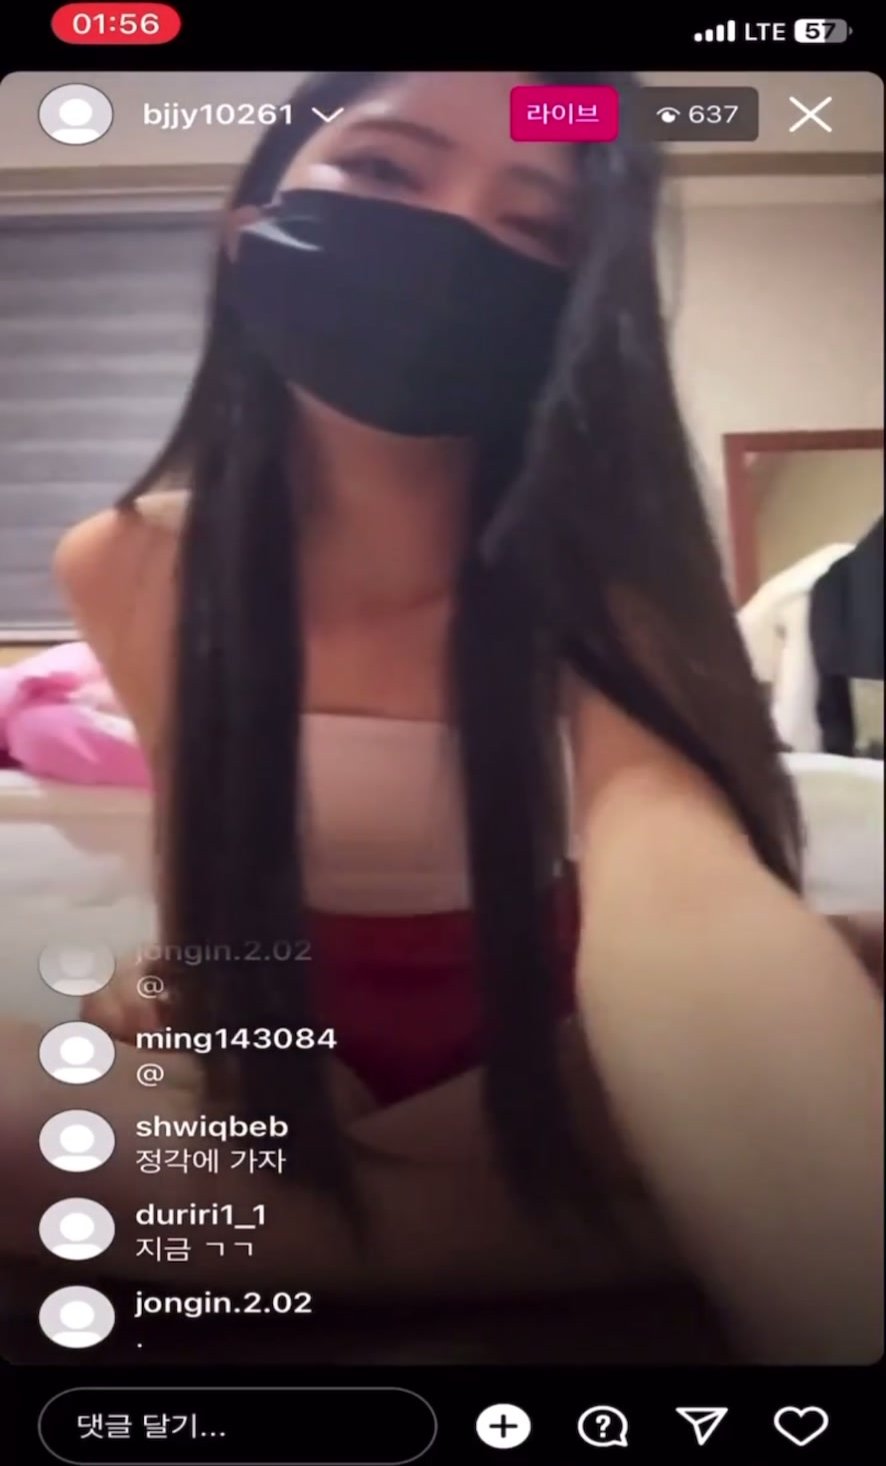 Korean teen girl masturbation instagram live (1)